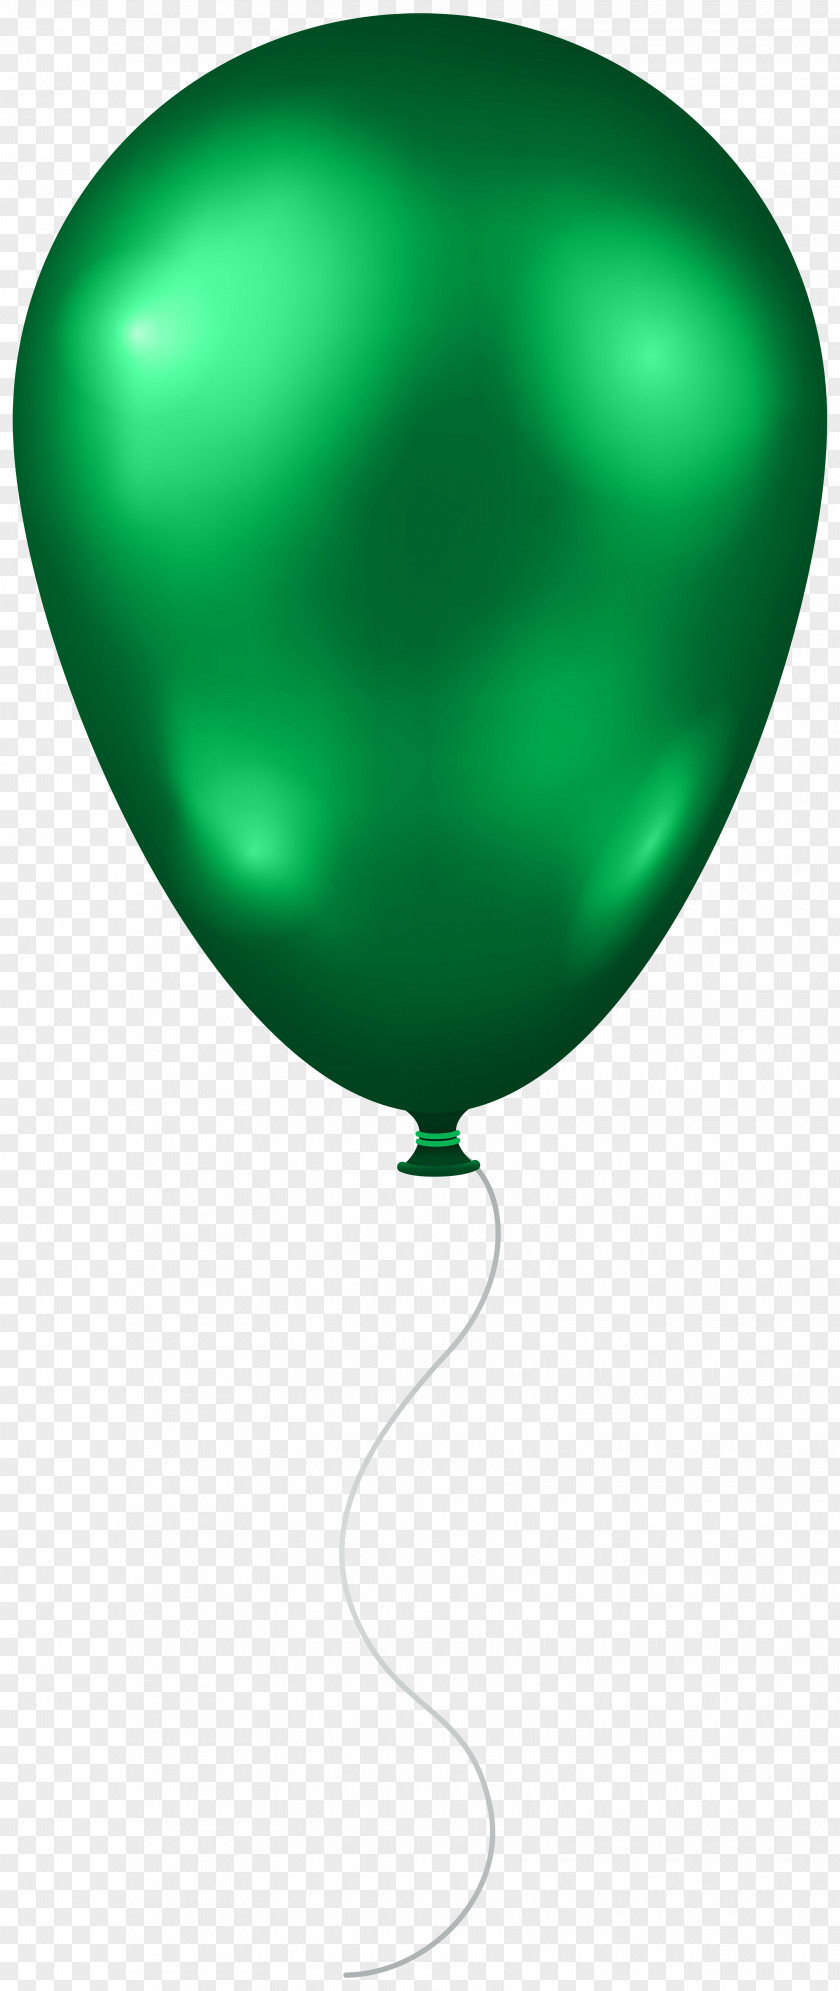 Green Balloon Transparent Clip Art Image Symbol PNG